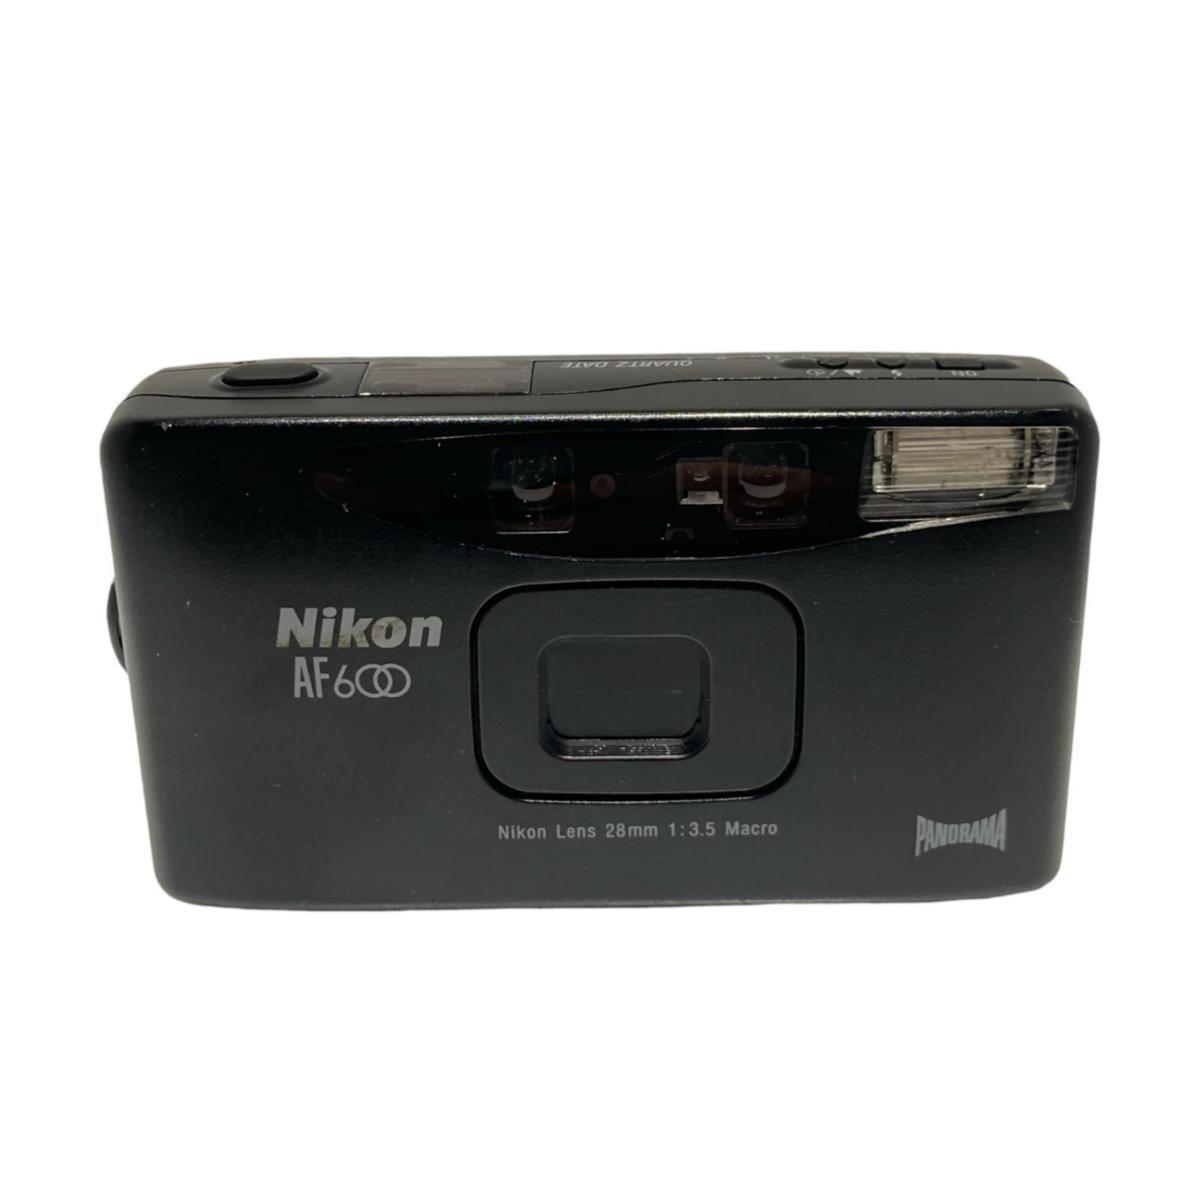 Nikon ニコン AF600 パノラマ フィルム コンパクト カメラ ブラック